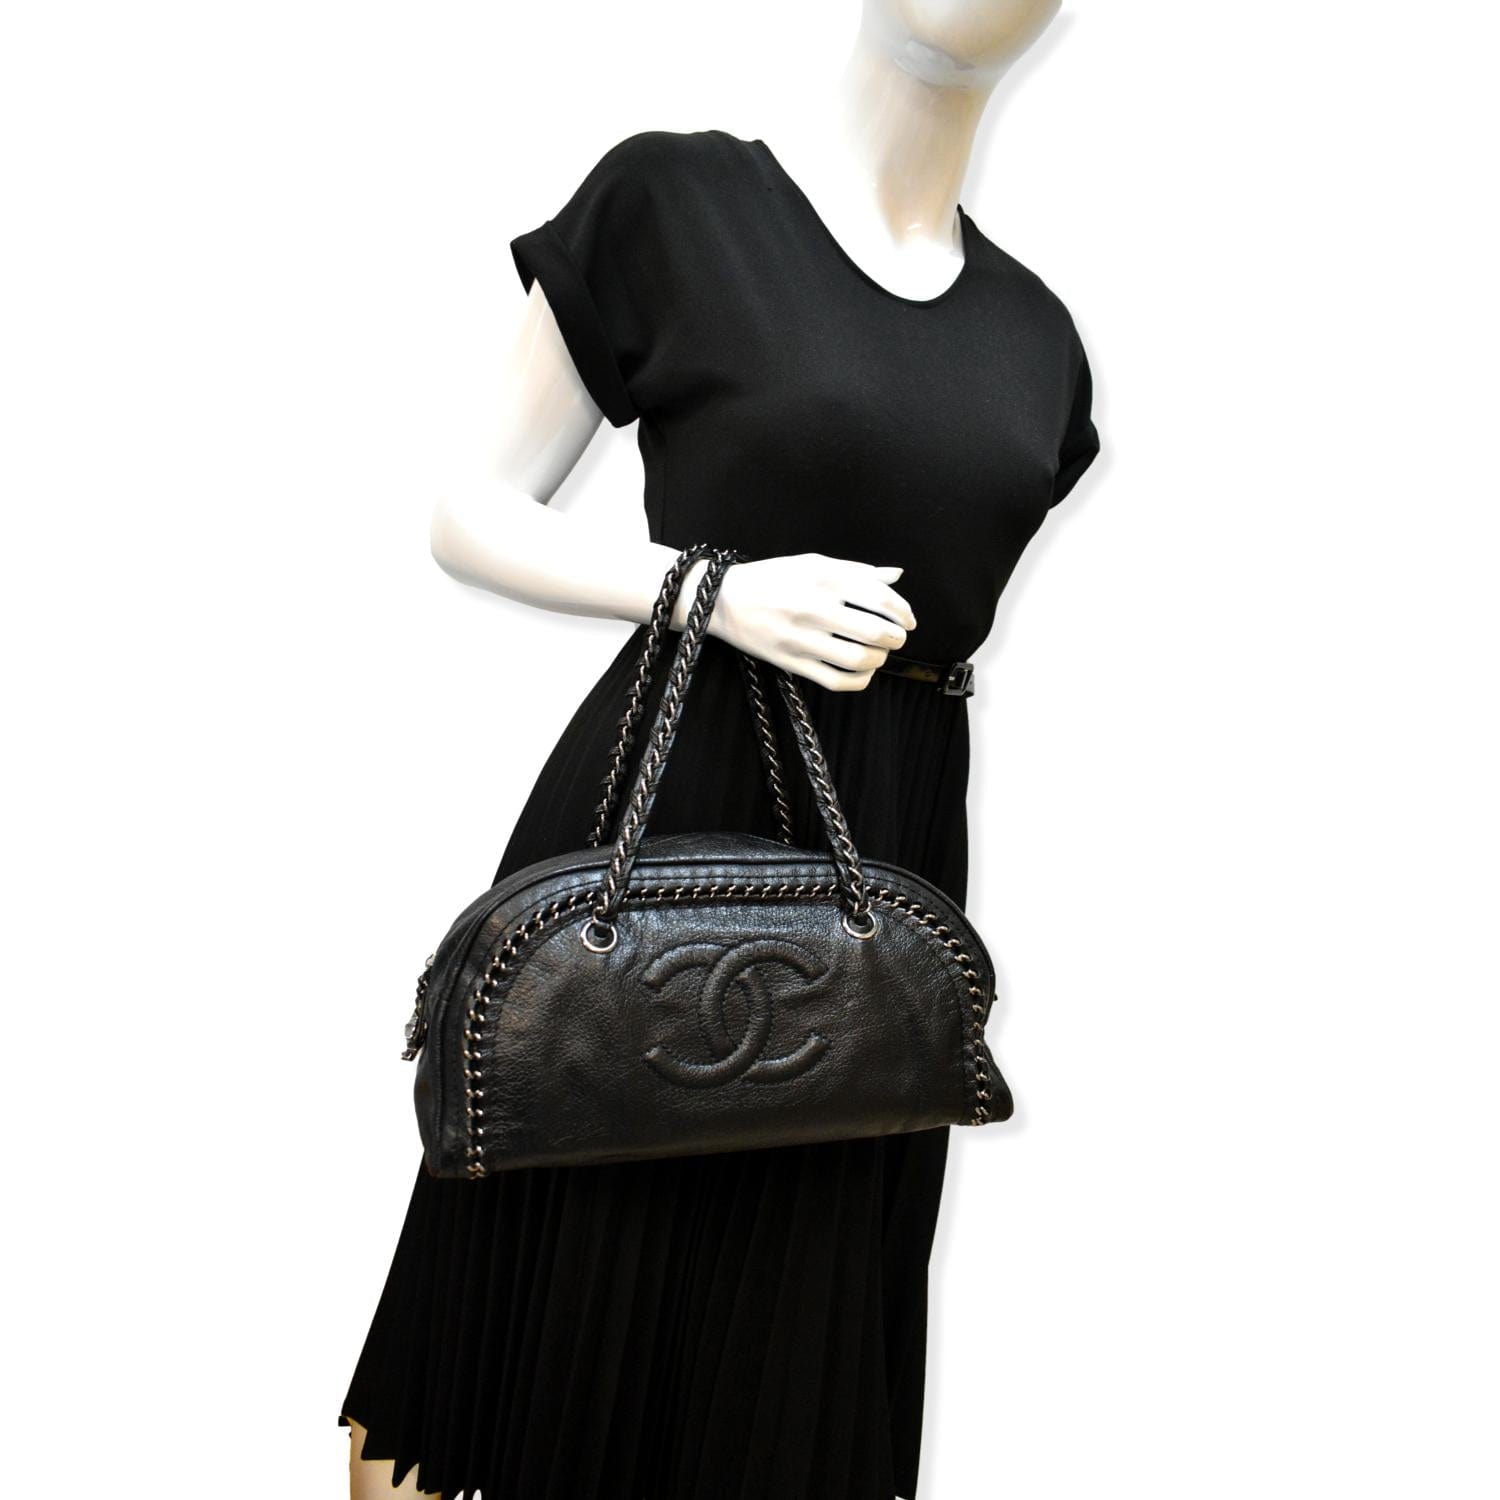 Authentic Black Patent Leather Chanel Medium Luxe Ligne Bowler Bag